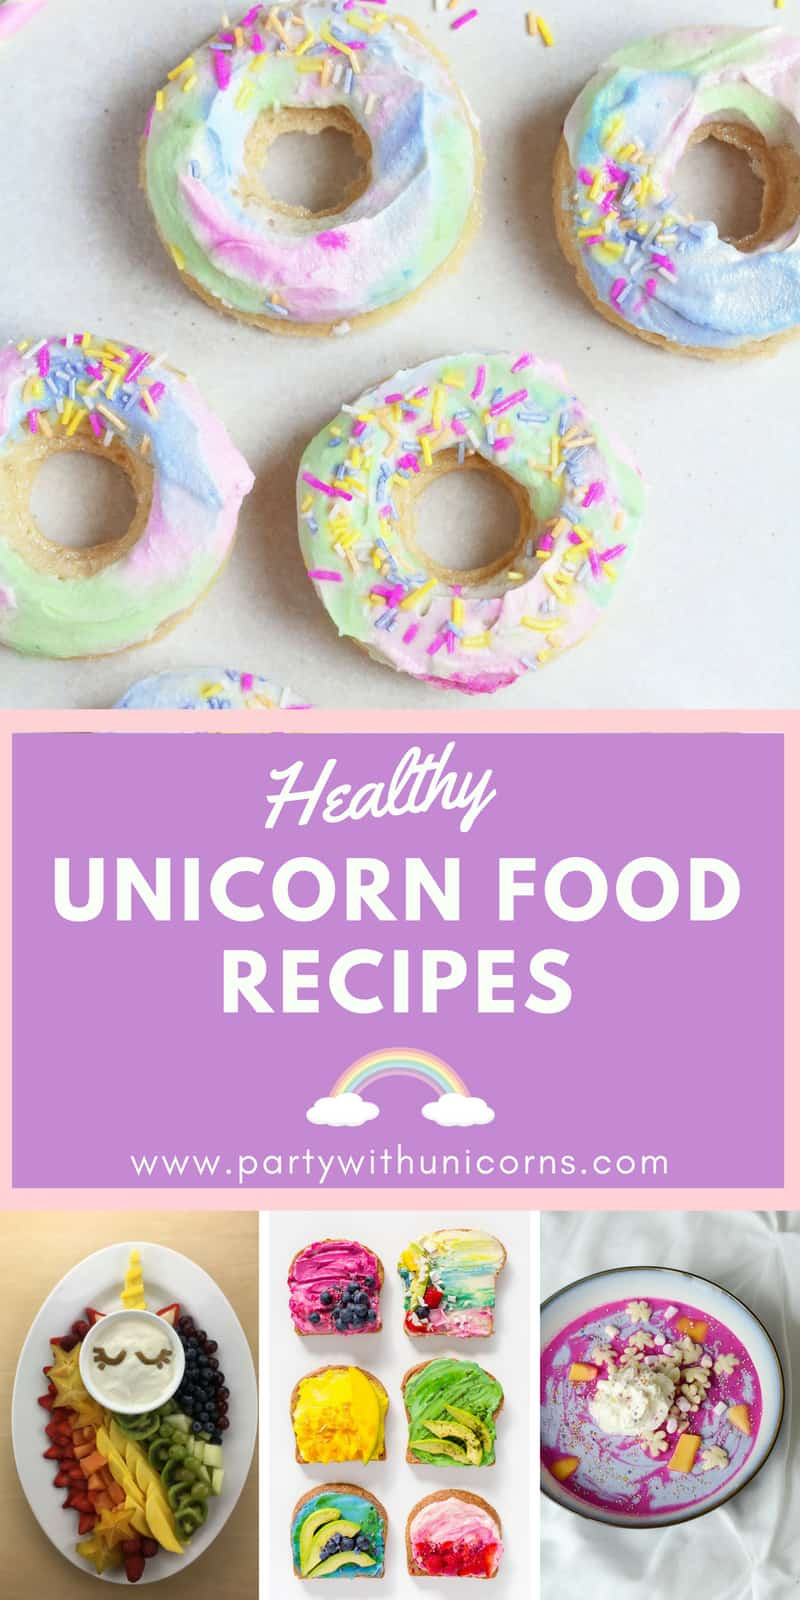 Healthy Unicorn Party Food Ideas
 Healthy Unicorn Foods